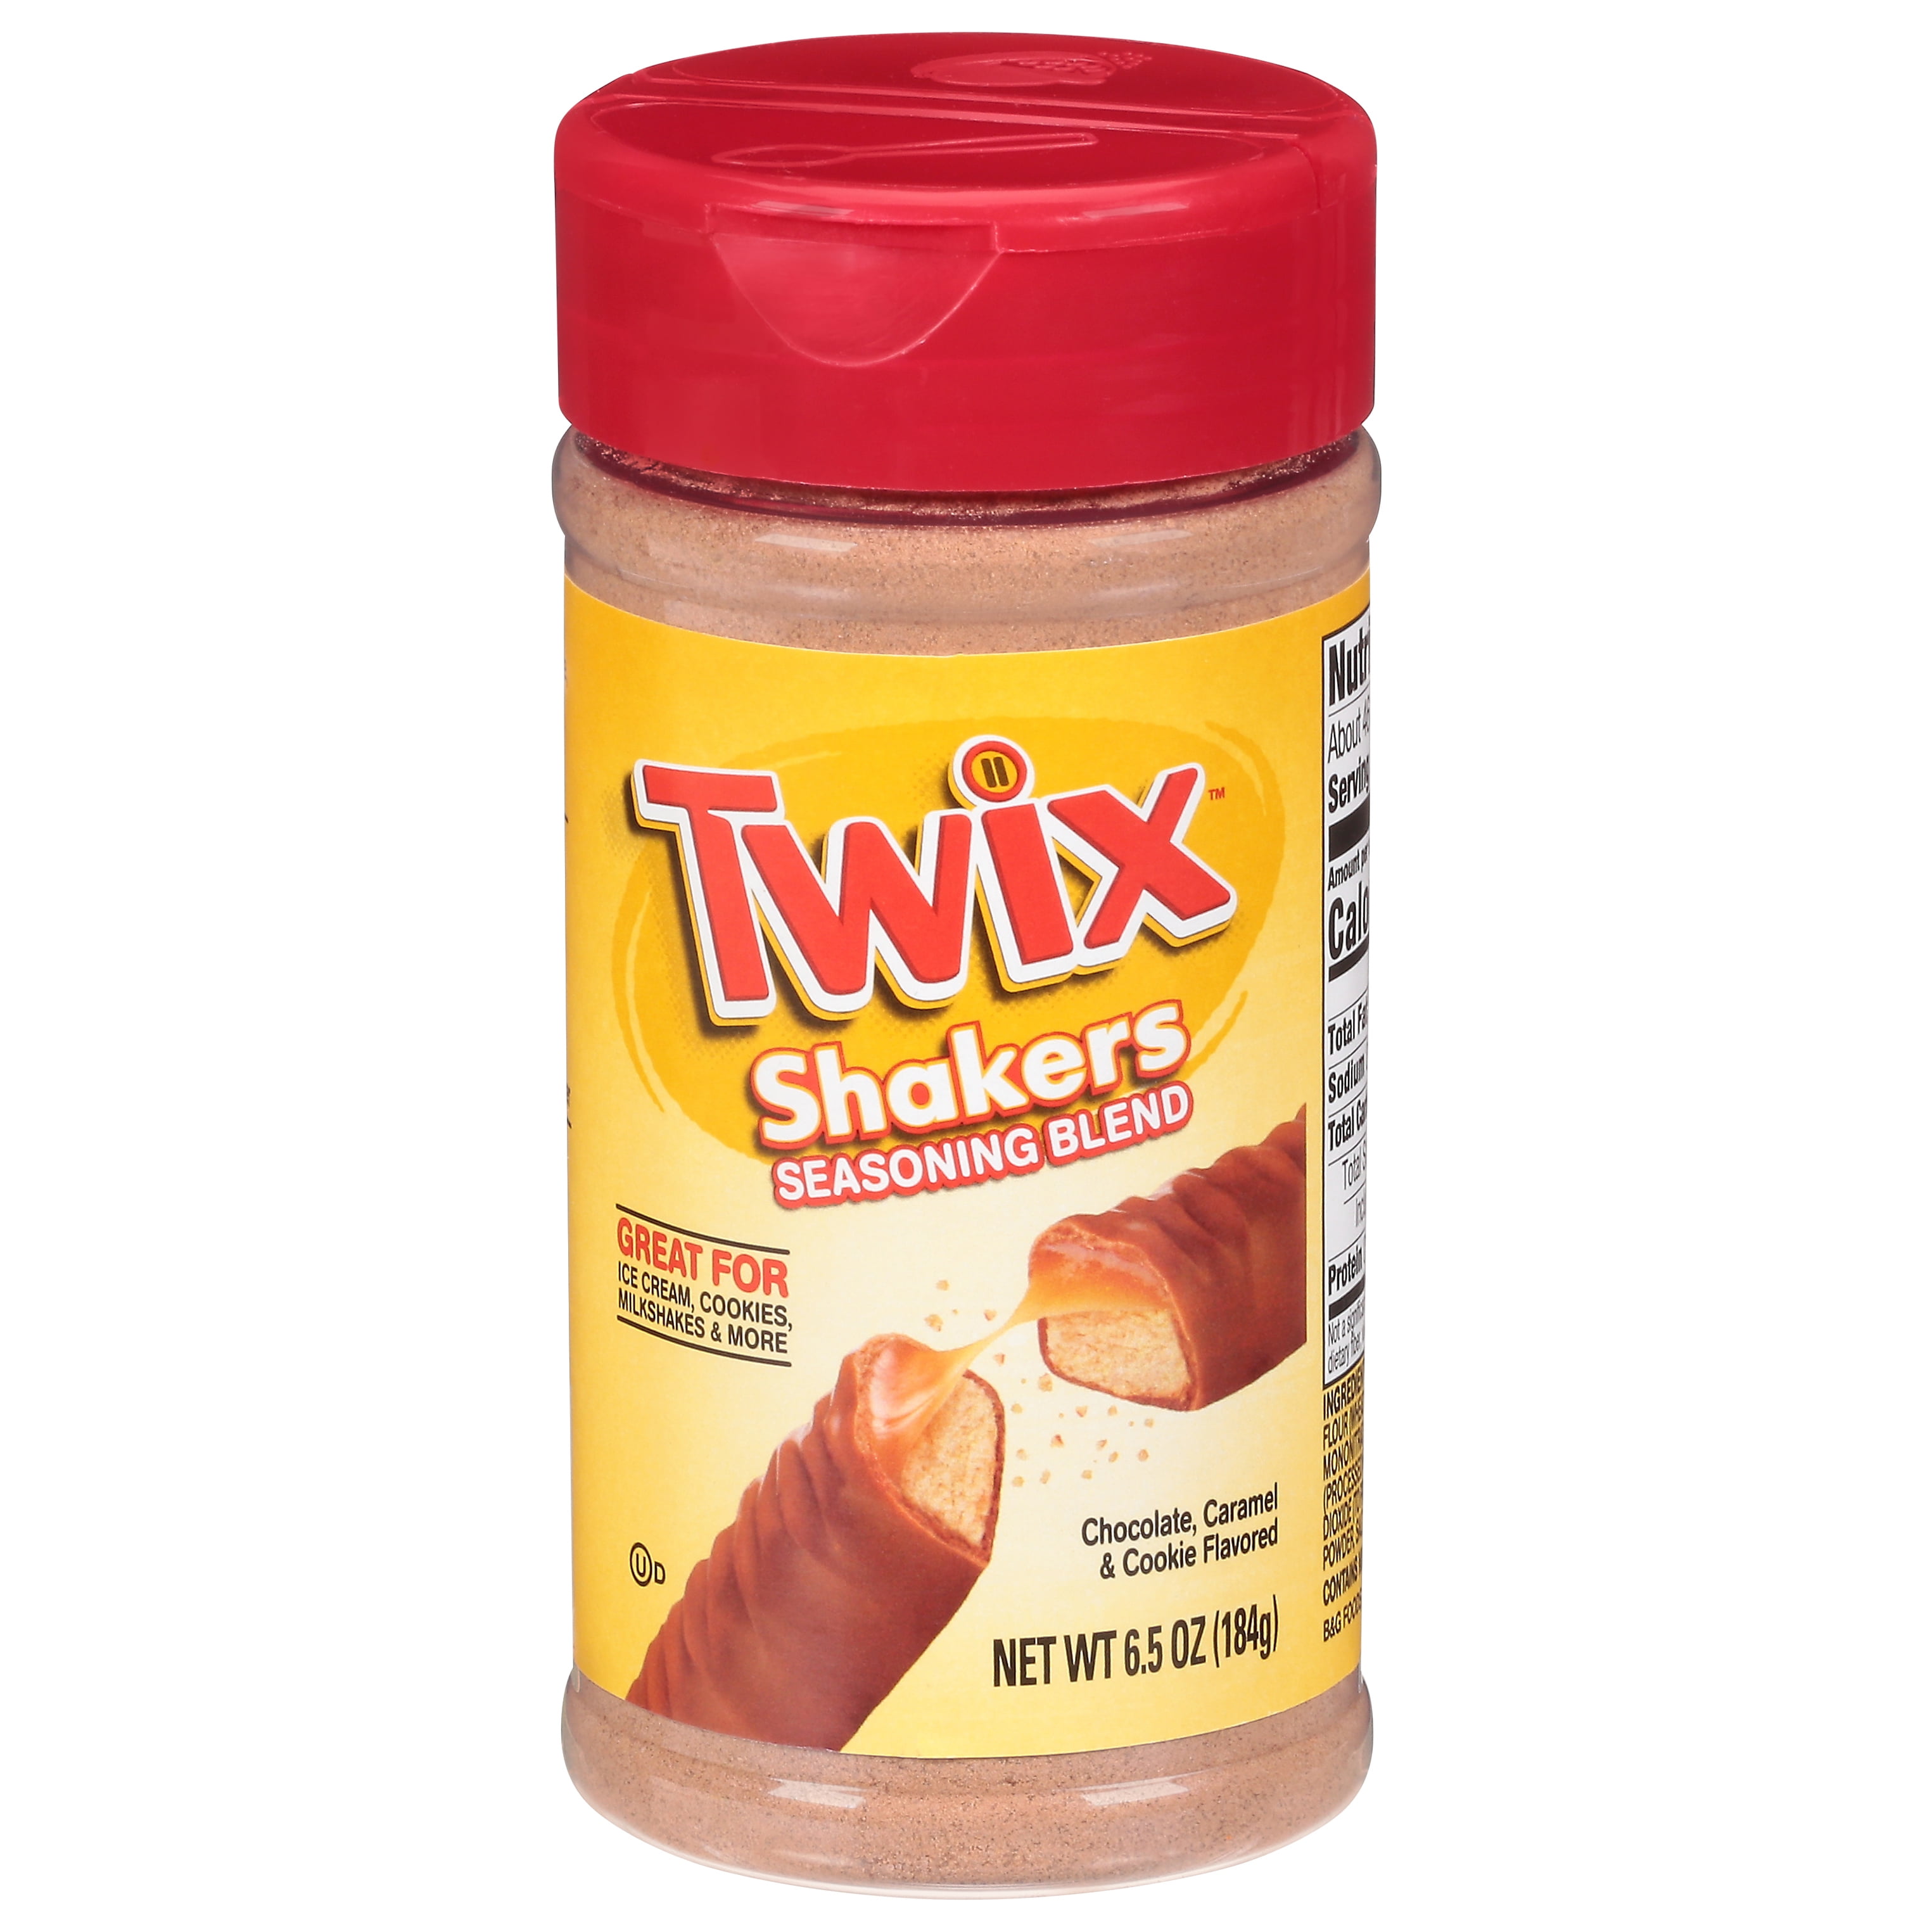 Twix Shakers Seasoning Blend, 6.5 oz